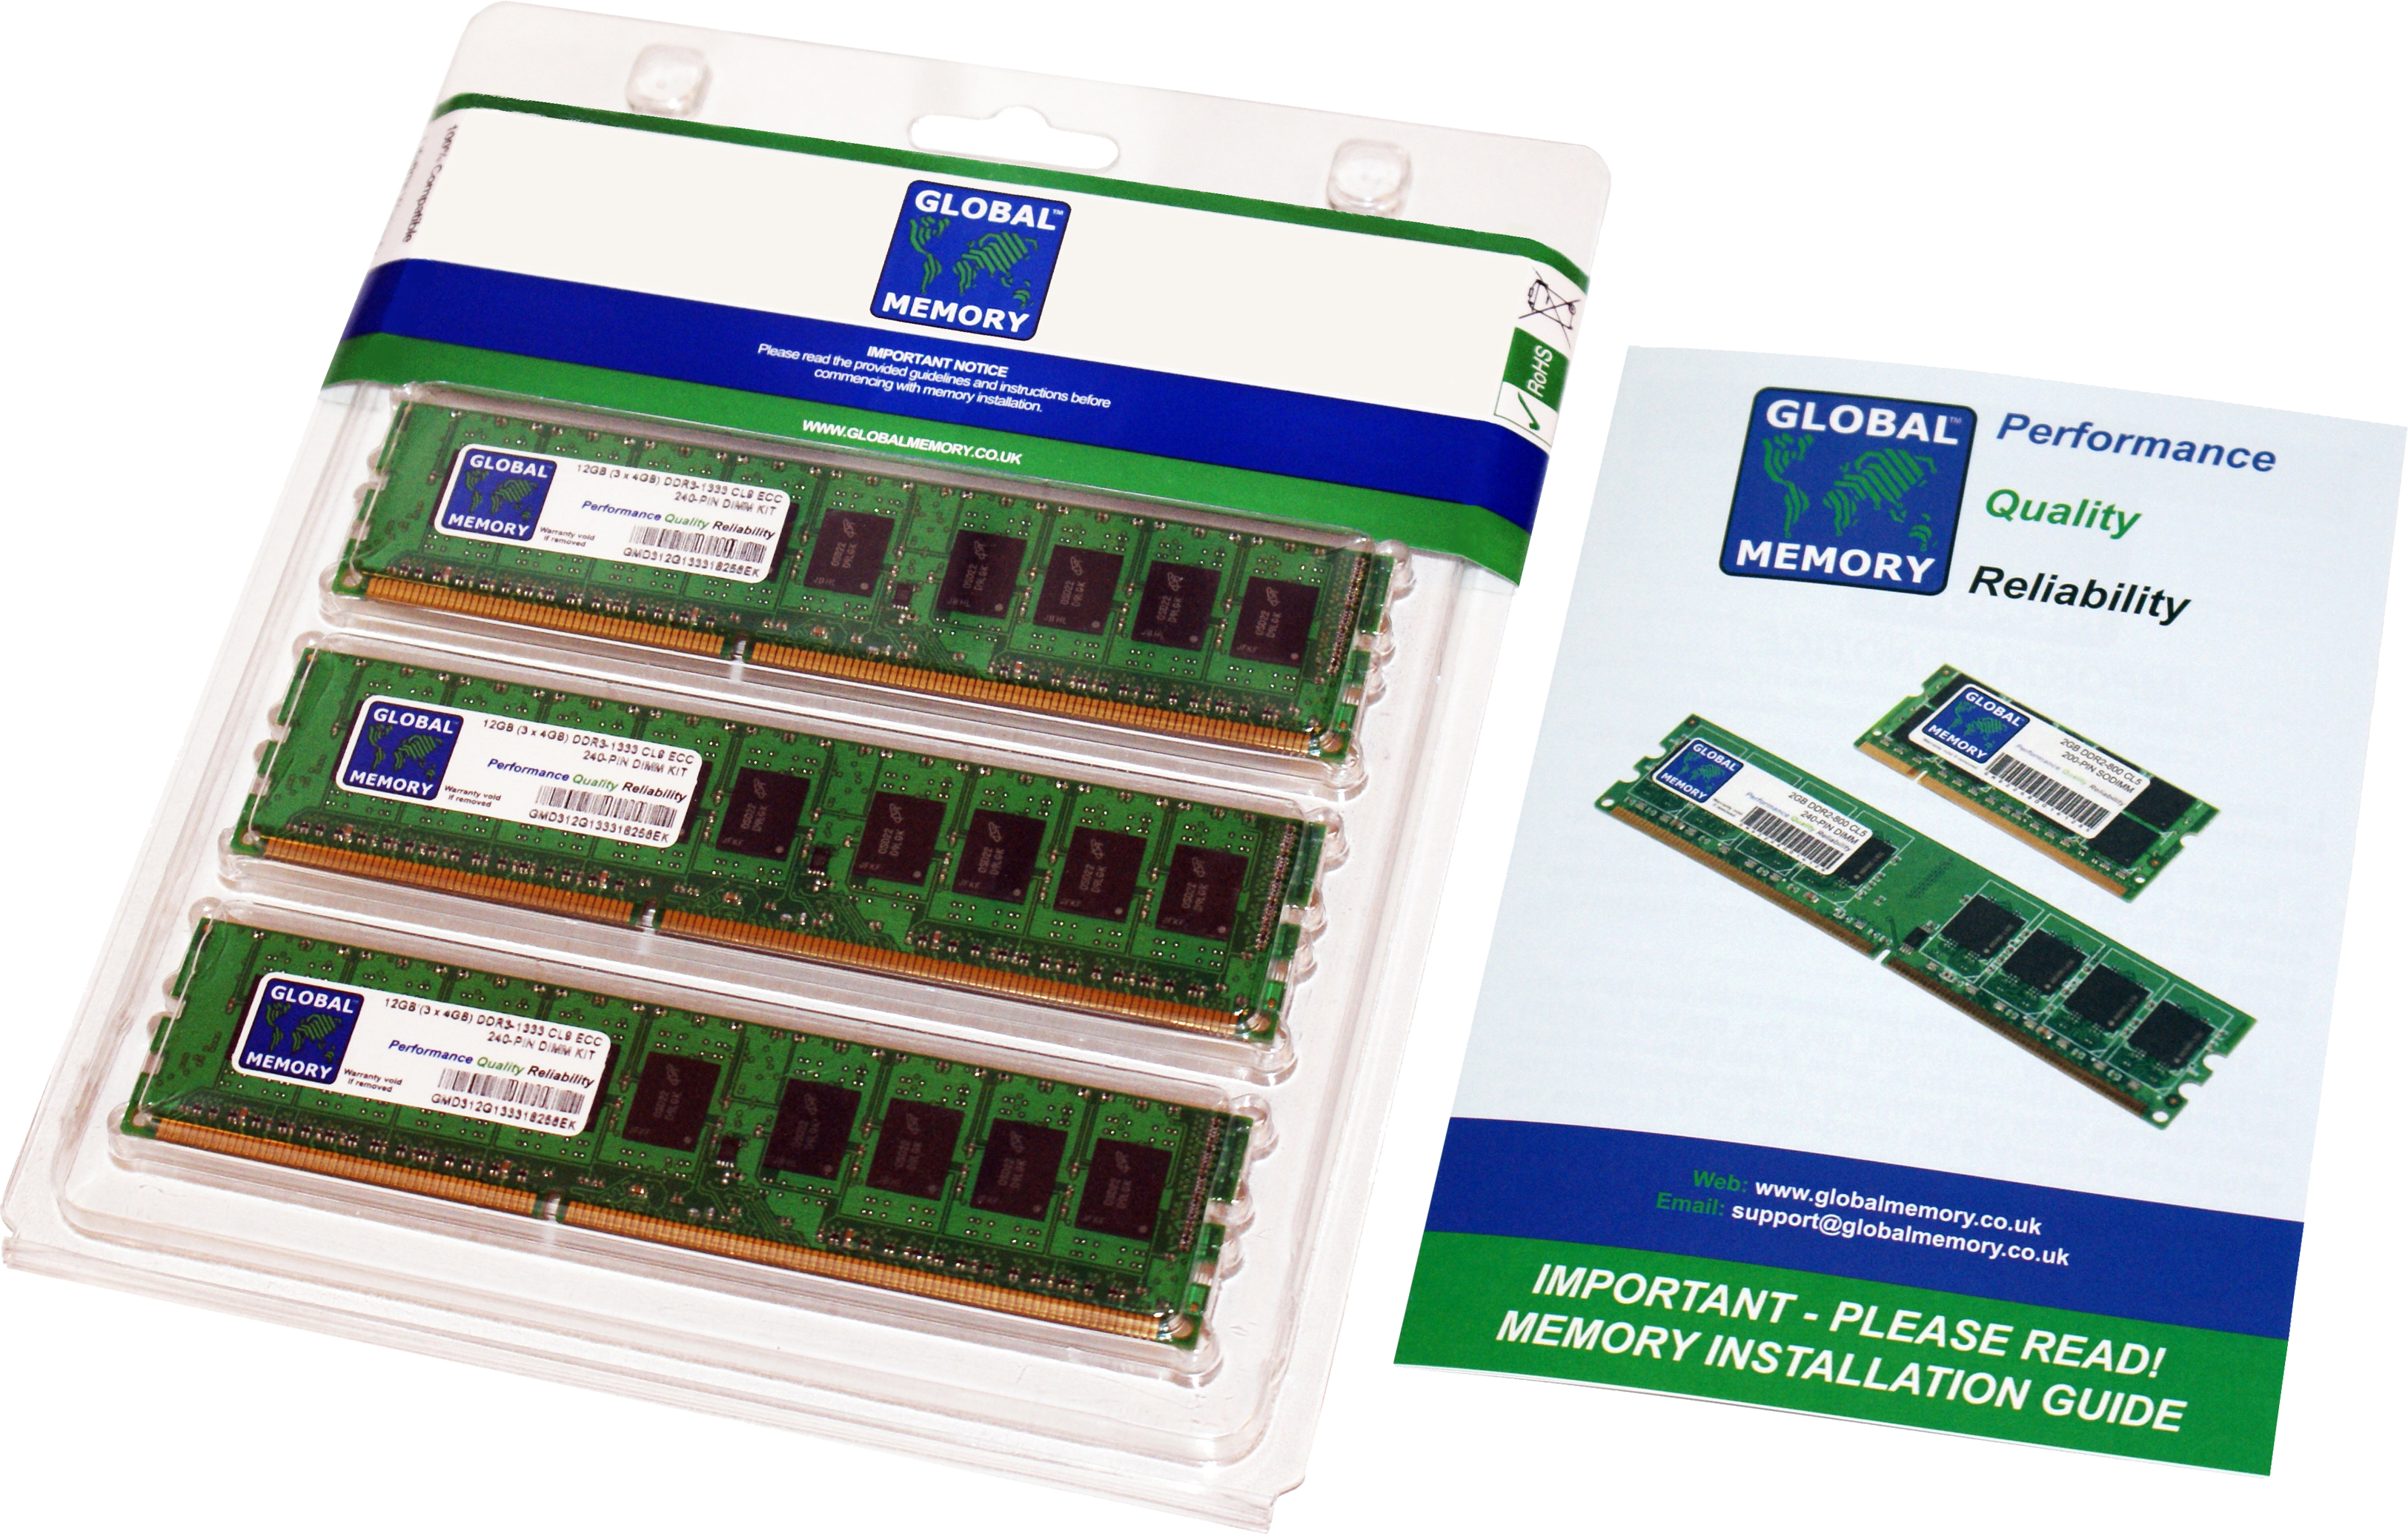 12GB (3 x 4GB) DDR3 1866MHz PC3-14900 240-PIN ECC DIMM (UDIMM) MEMORY RAM KIT FOR DELL SERVERS/WORKSTATIONS